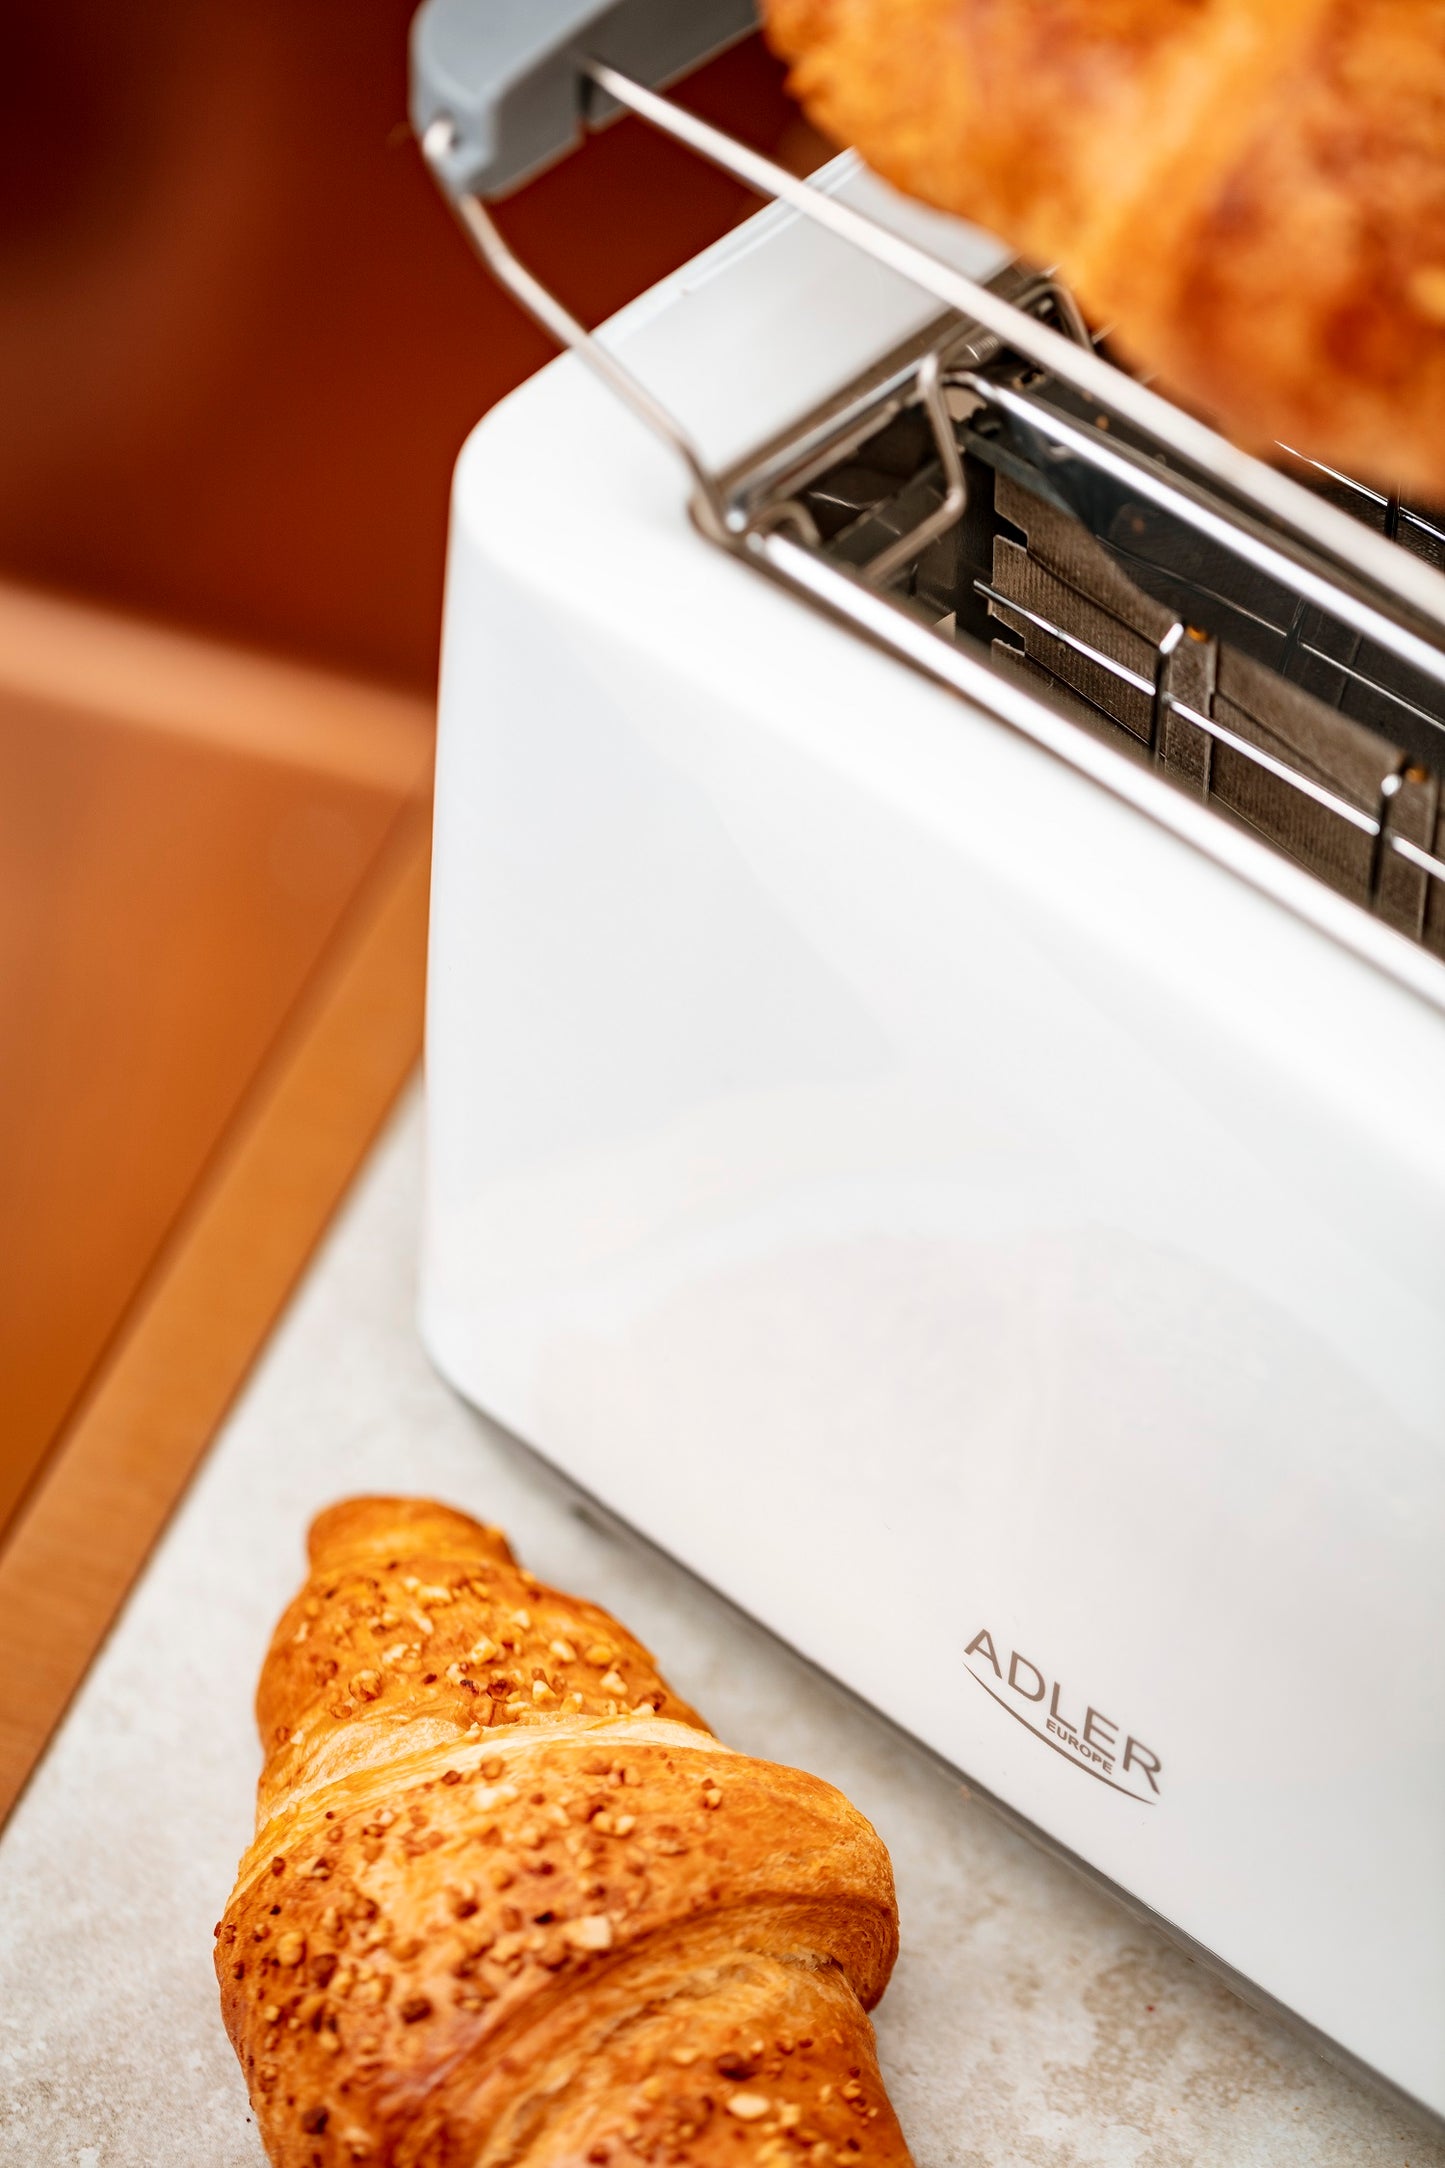 Adler AD3216 2 Slice Toaster 1000W